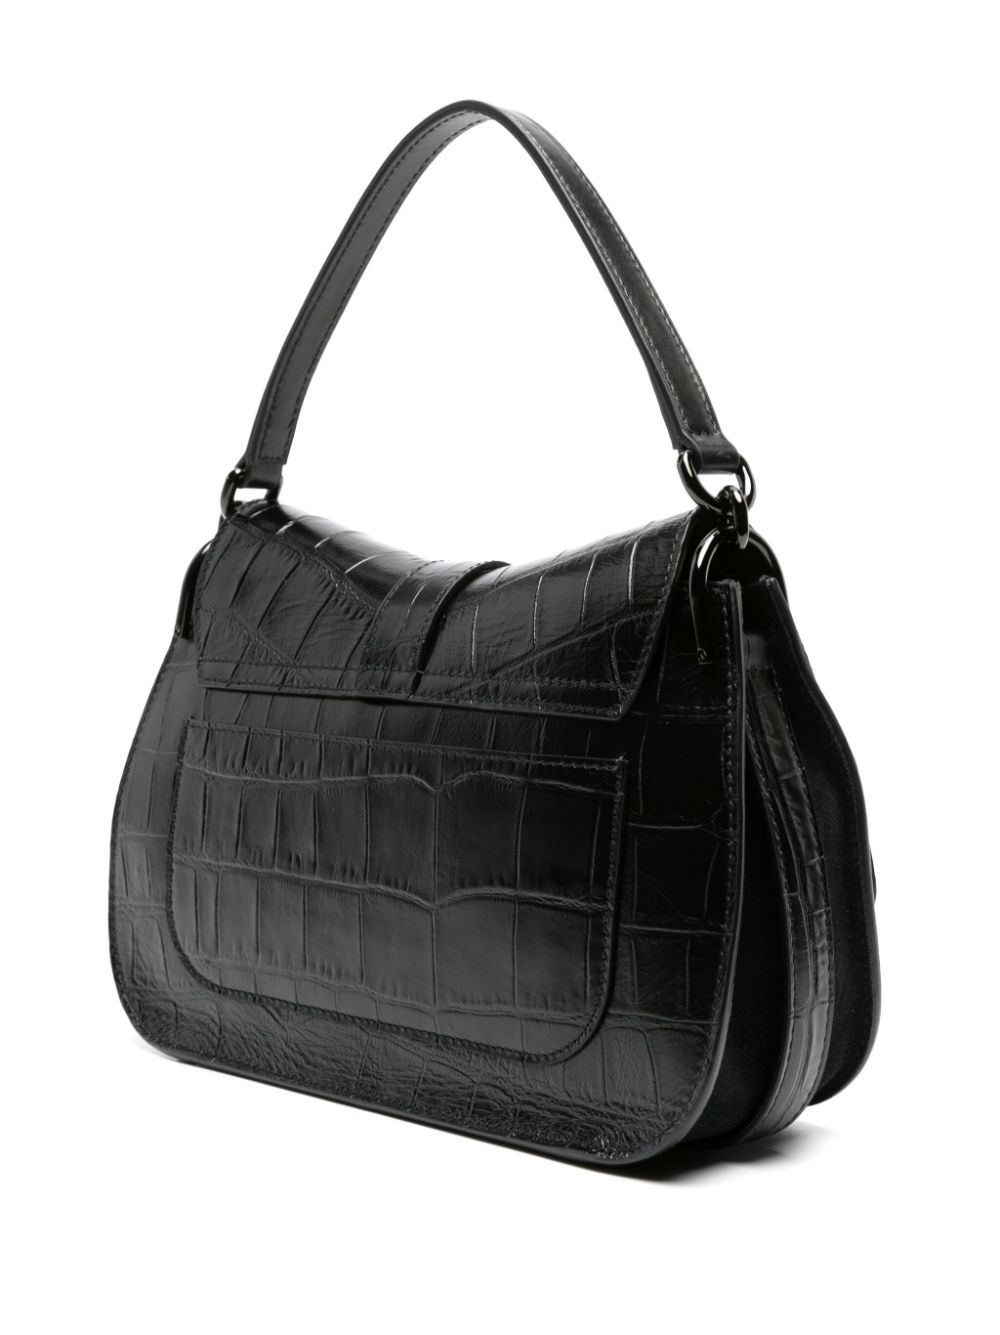 Furla Italian Leather Embossed Crocodile Tote Shoulder Bag Satchel Handbag  Taupe